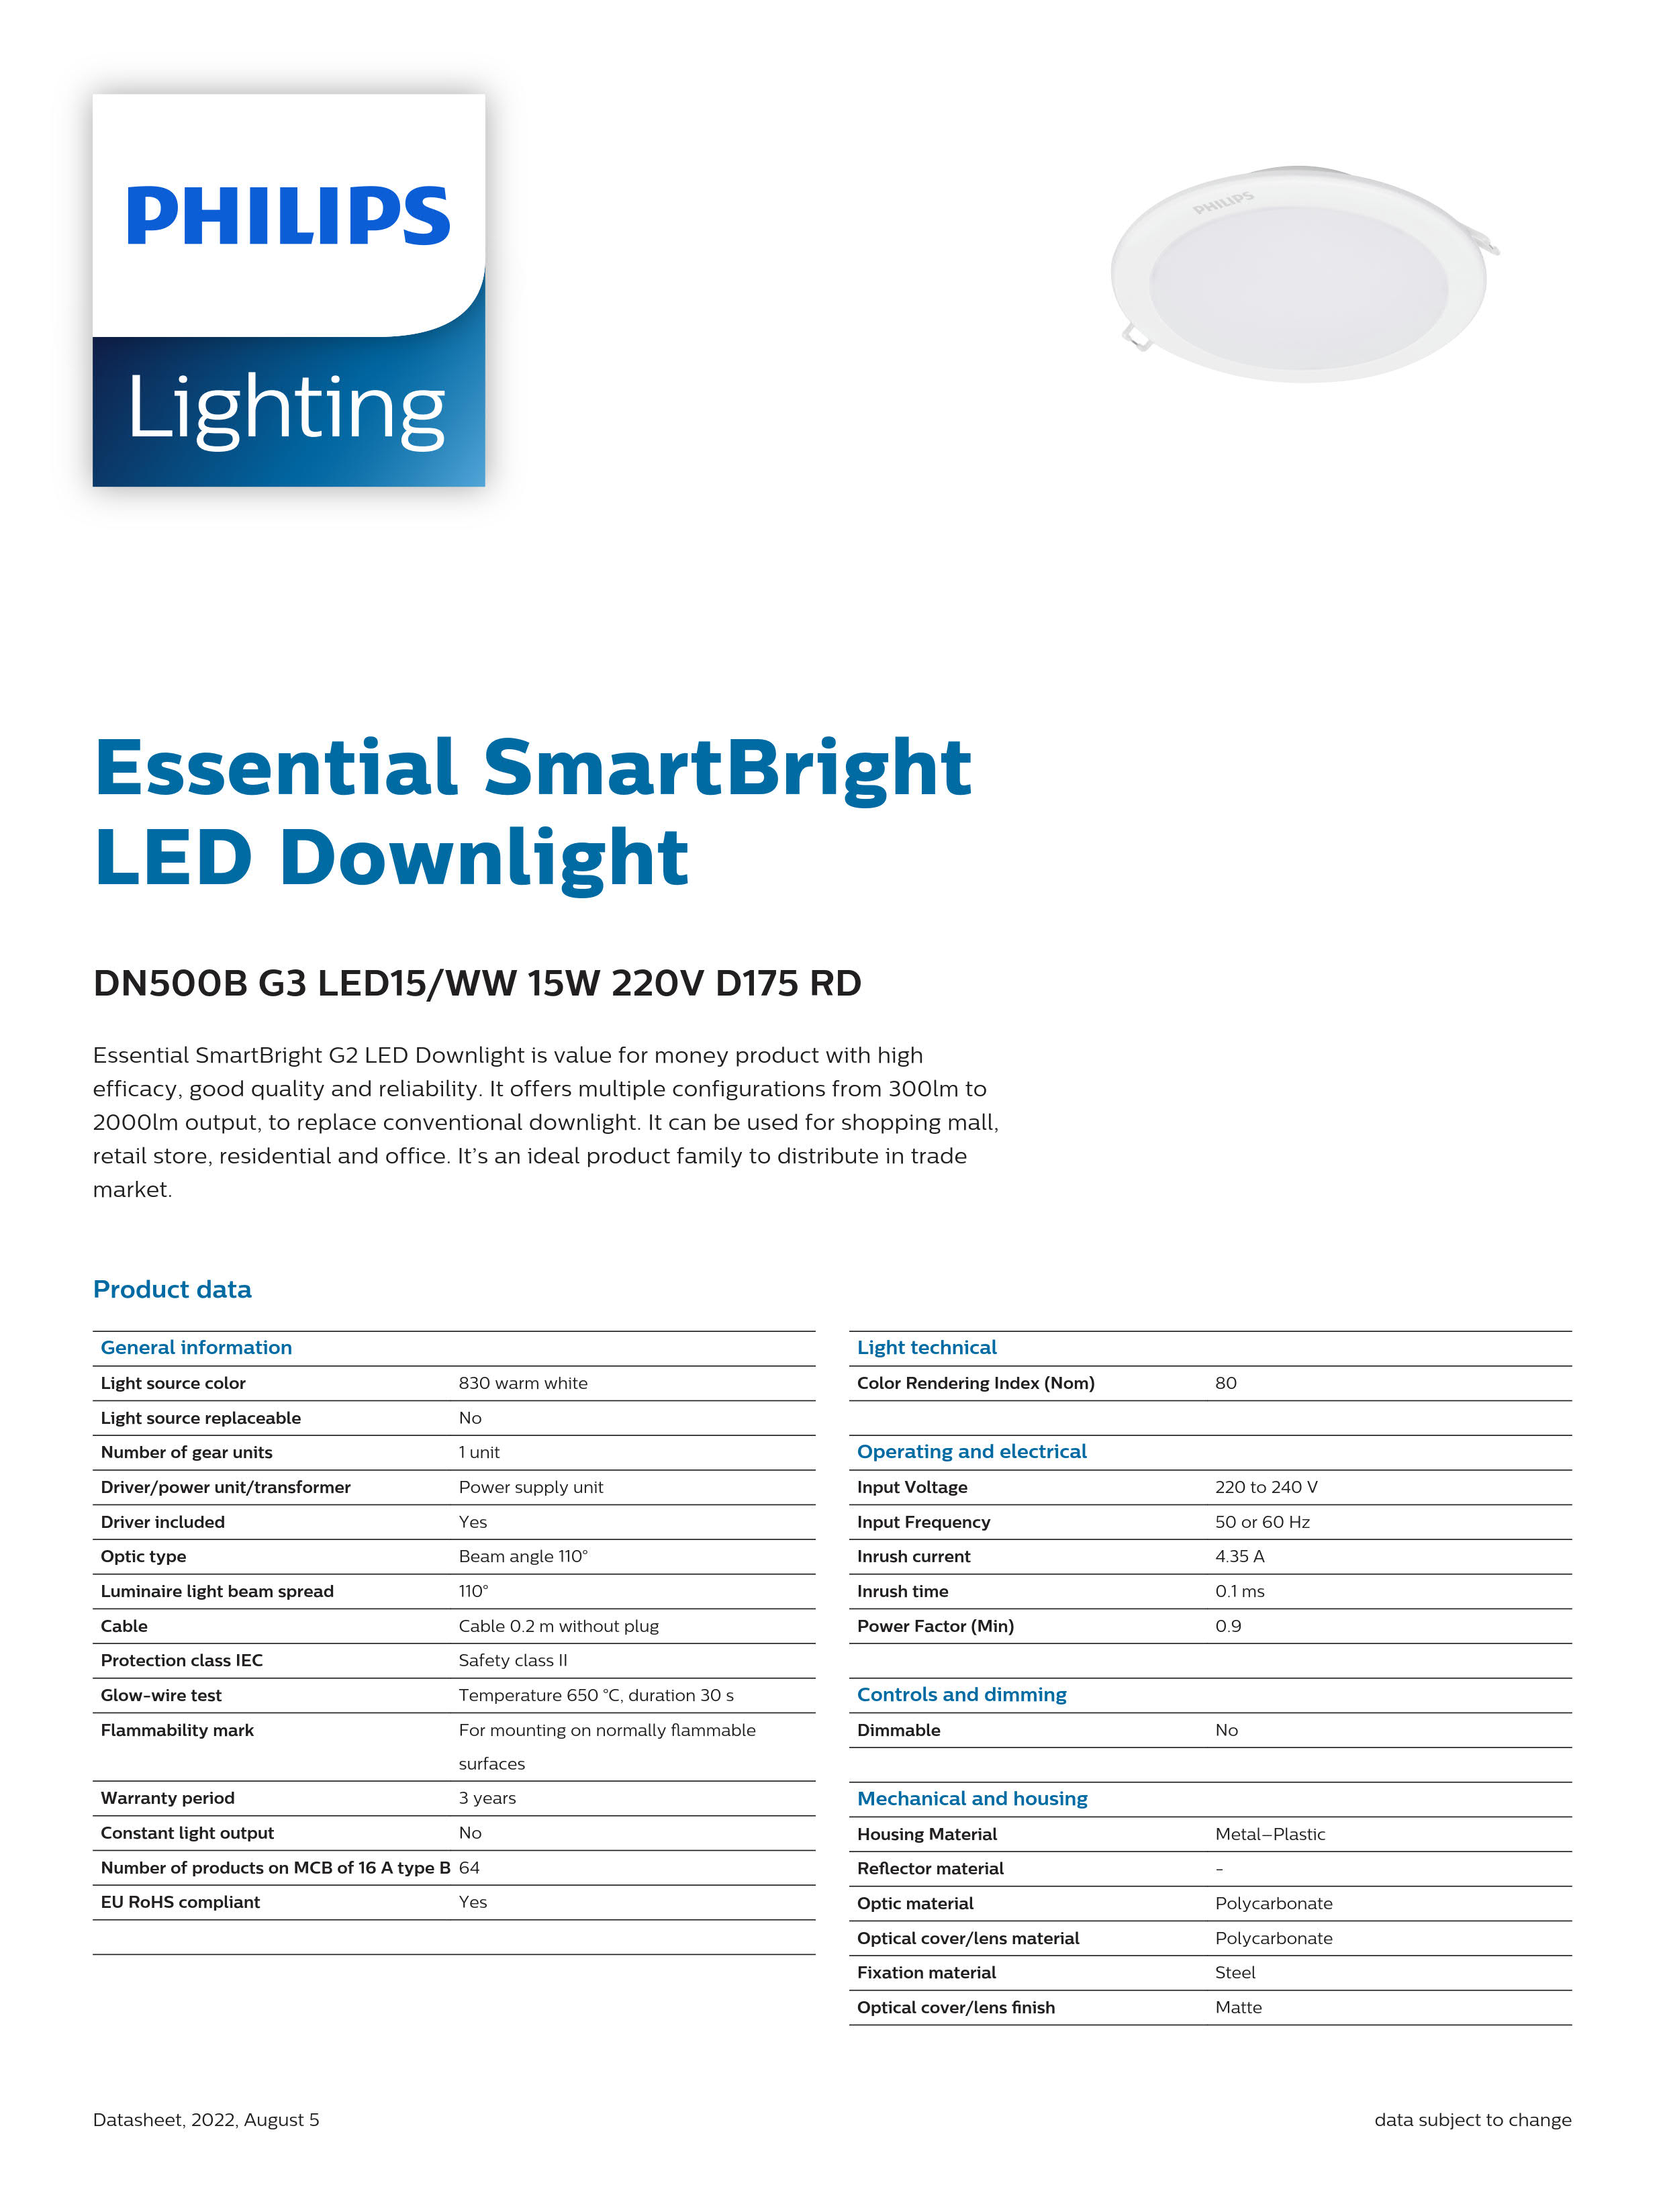 PHILIPS LED downlight DN500B G3 LED15/WW 15W 220V D175 RD 929002677840